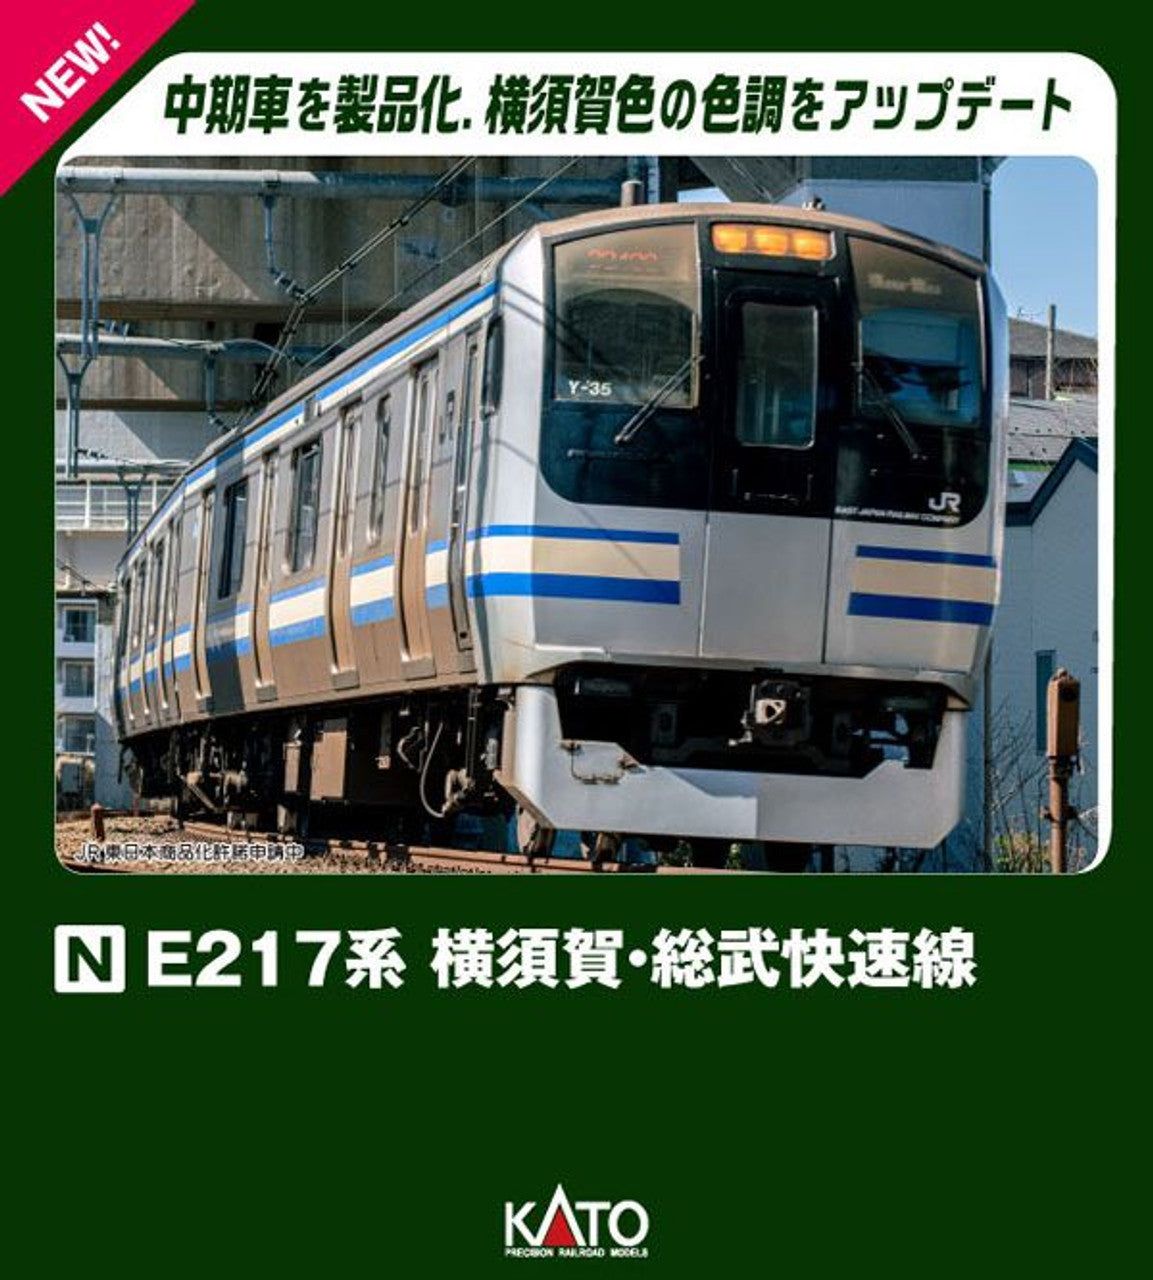 Kato 10-1979 Series E217 Yokosuka/Sobu Rapid Line 4 Cars Add-on Set (N scale) - BanzaiHobby